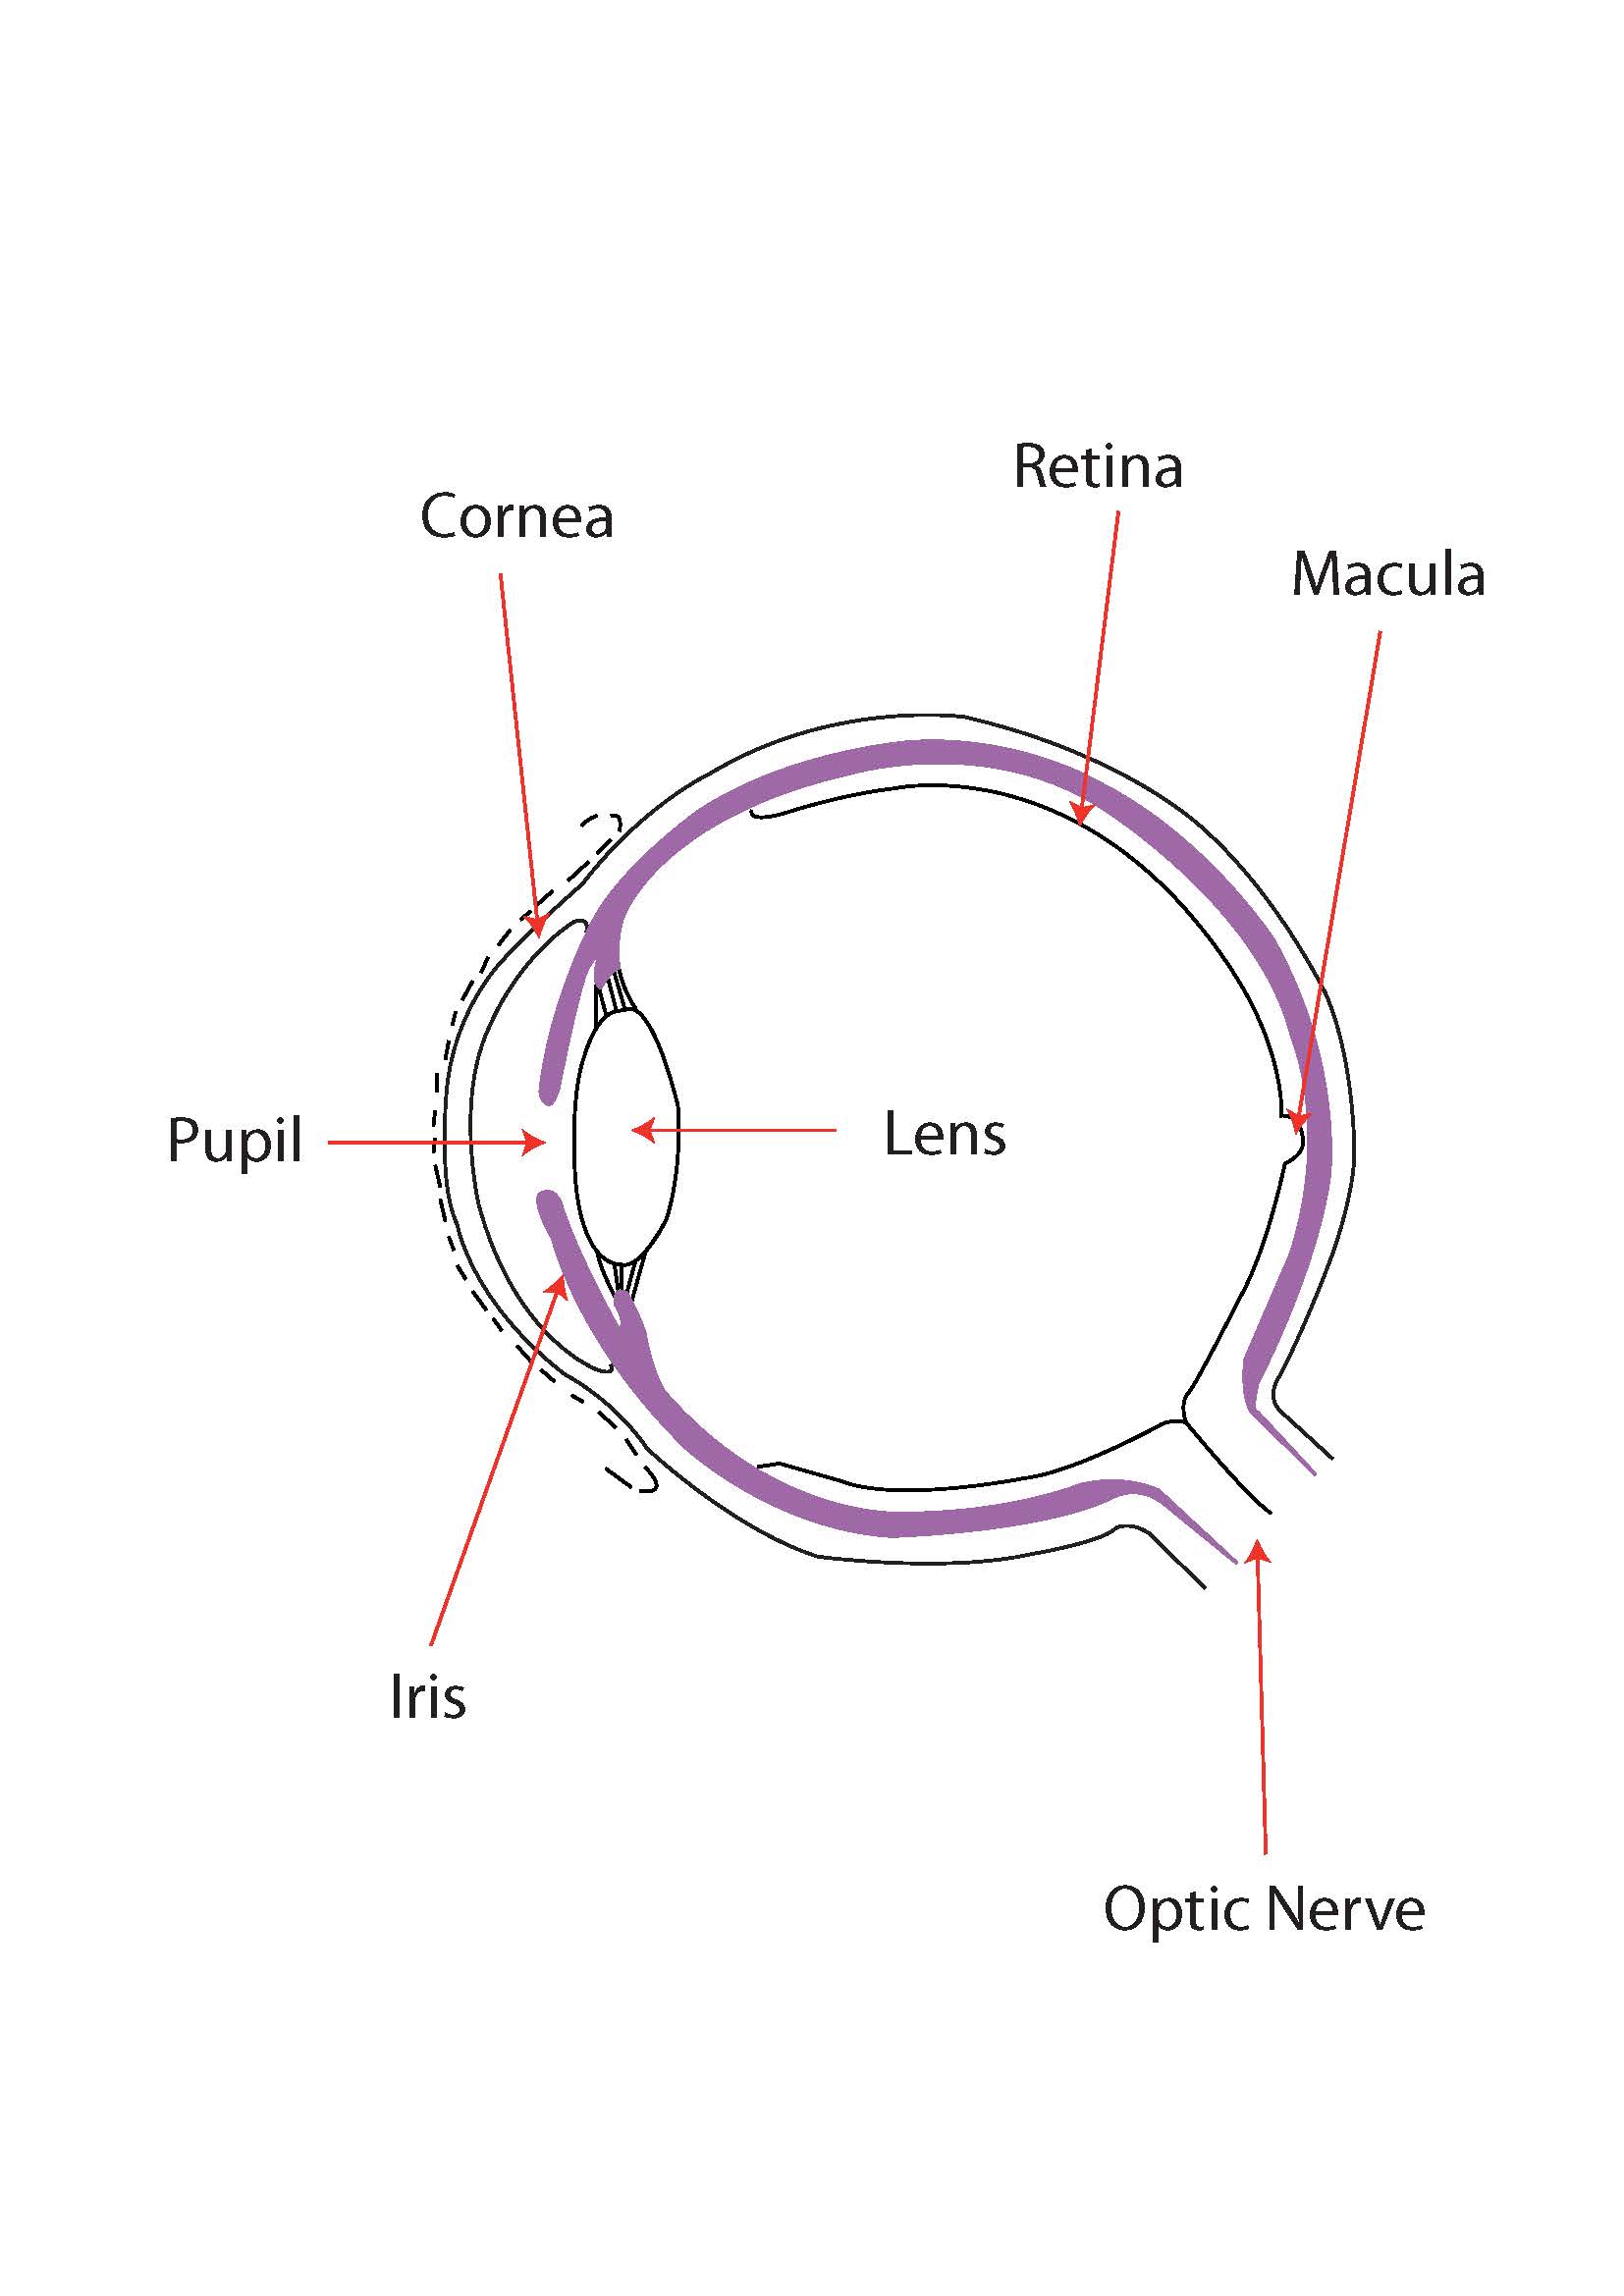 Diagram showing parts of the eye - the cornea, retina, macula, pupil lens, iris, and optic nerve